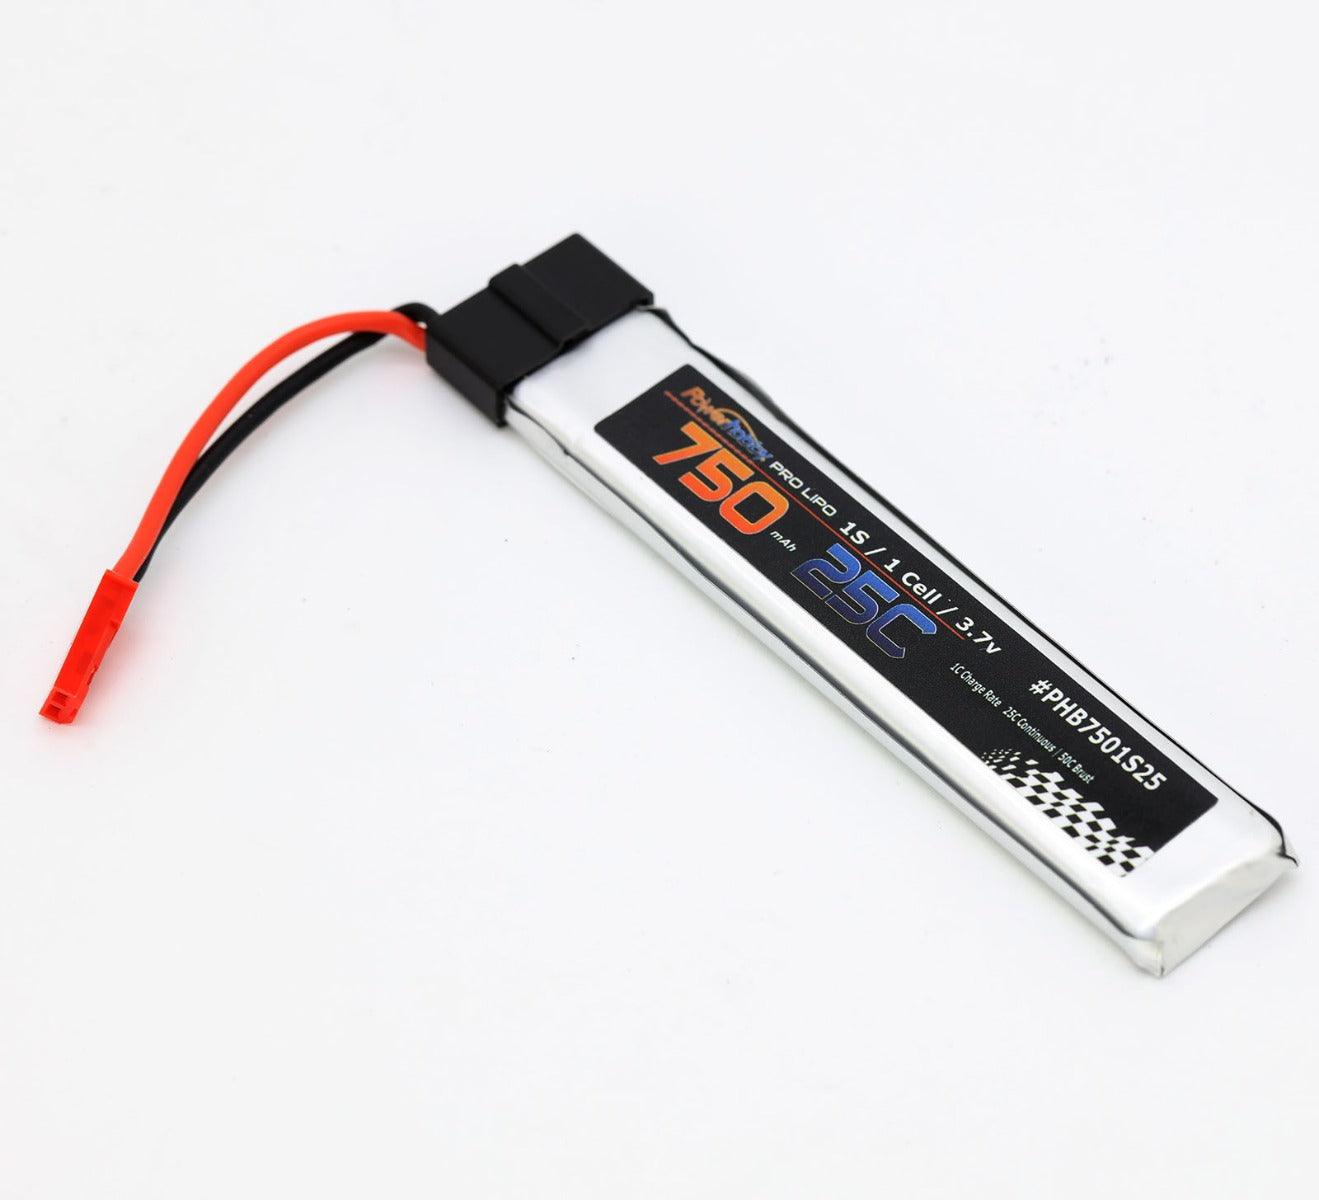 Powerhobby 1S 3.7V 750mah 25c Lipo Battery : Blade Zeyrok - PowerHobby